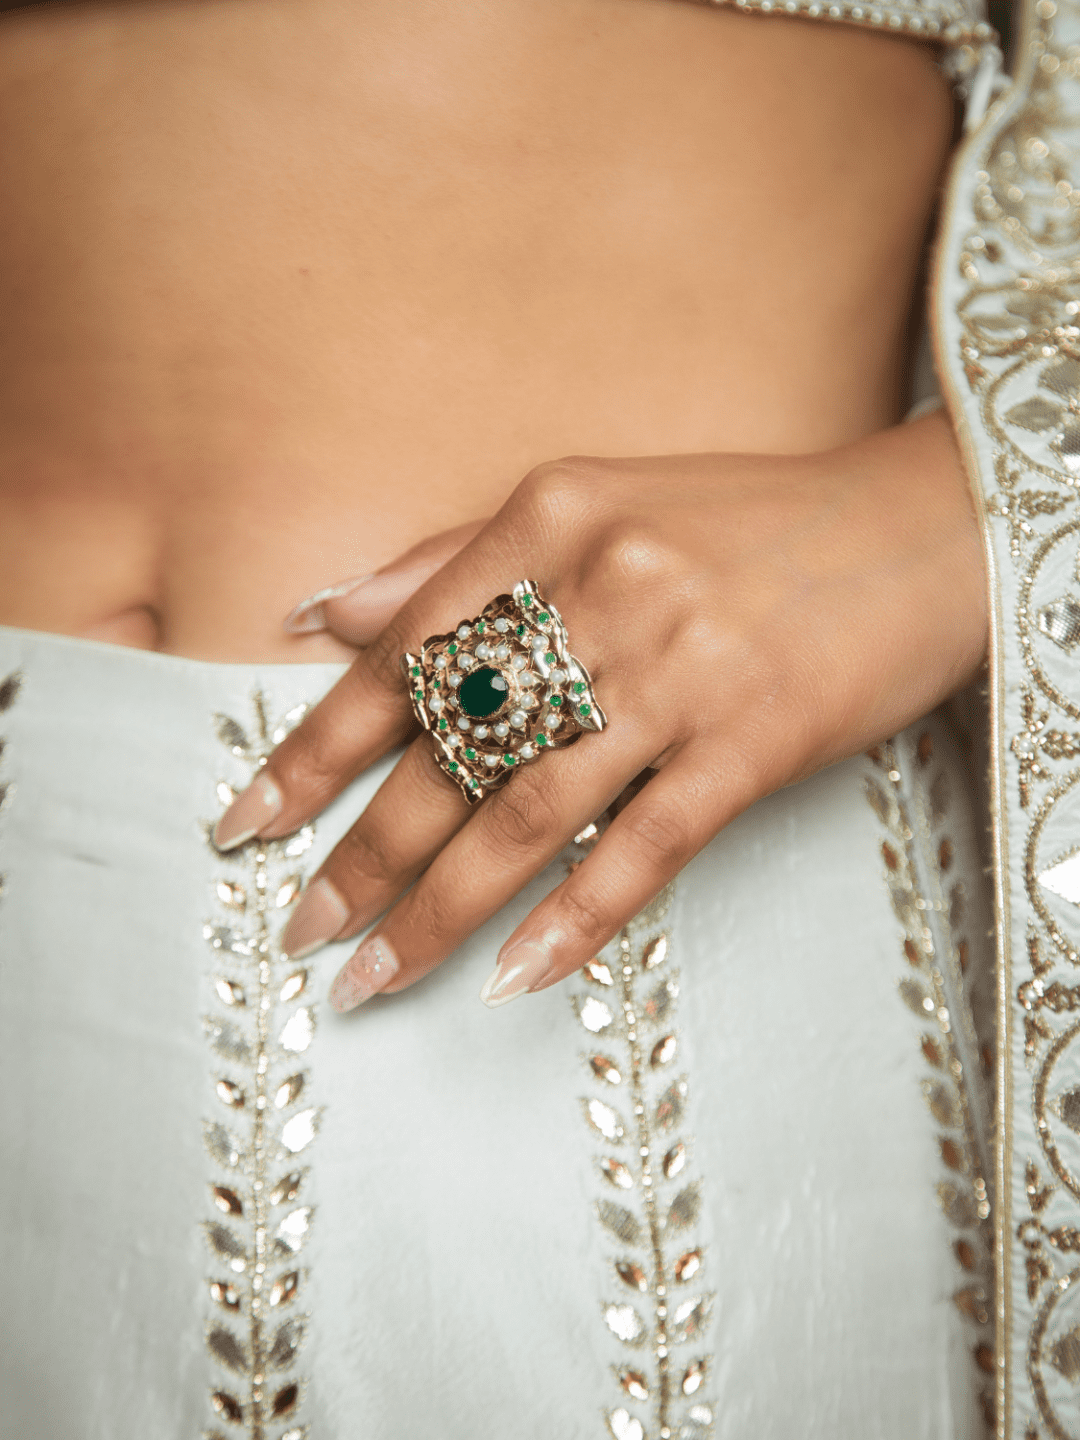 Square Look Alike Emerald With White Pearls Jadau Adjustable Ring